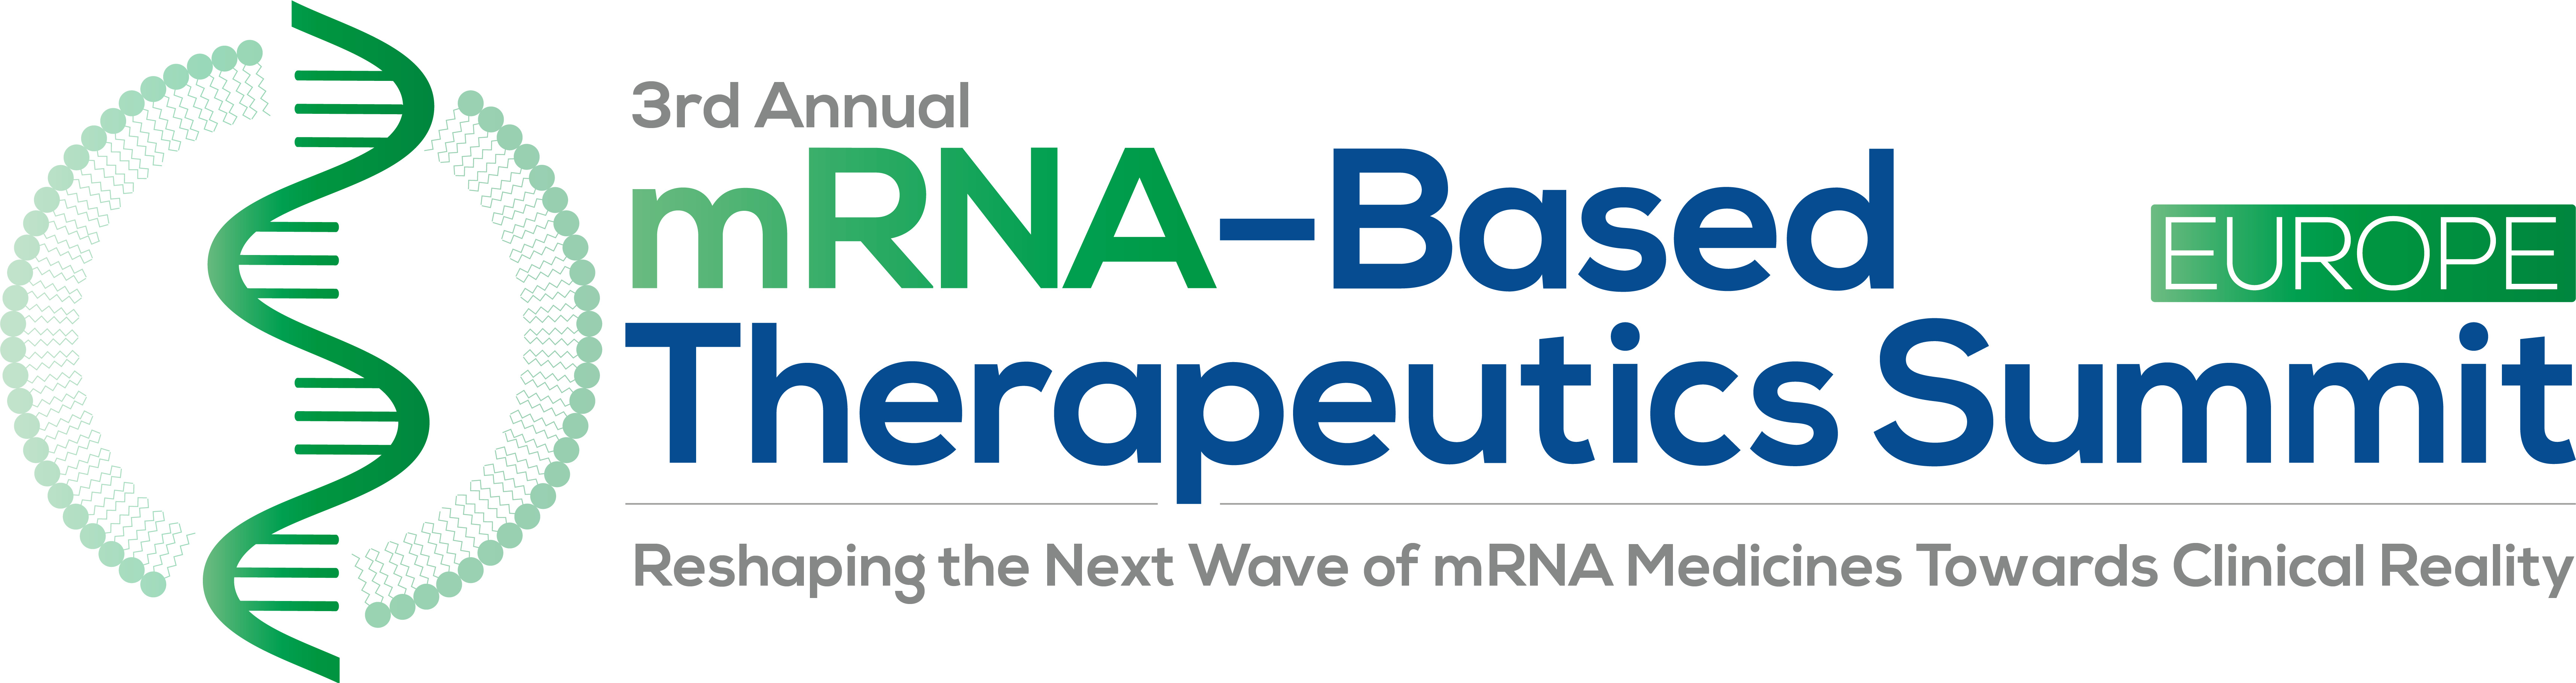 HW230316 3rd mRNA Based Therapeutics Summit Europe logo Tagline (1)